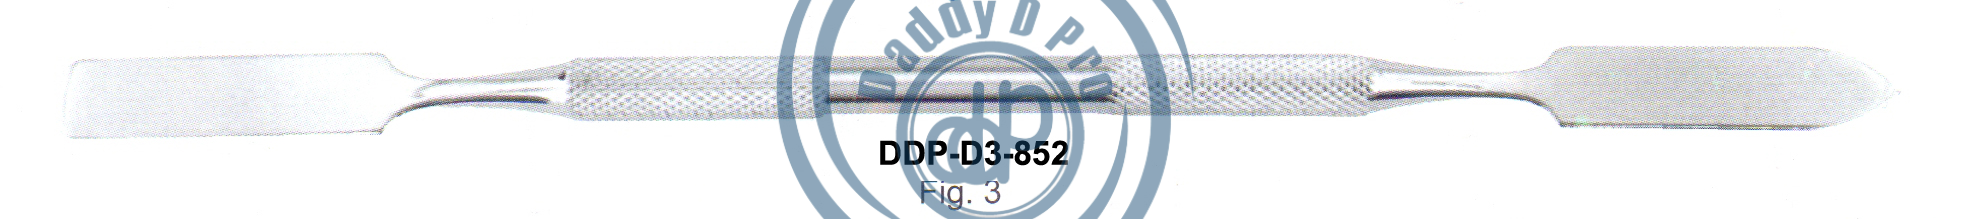 images/DDP-D3-852.png